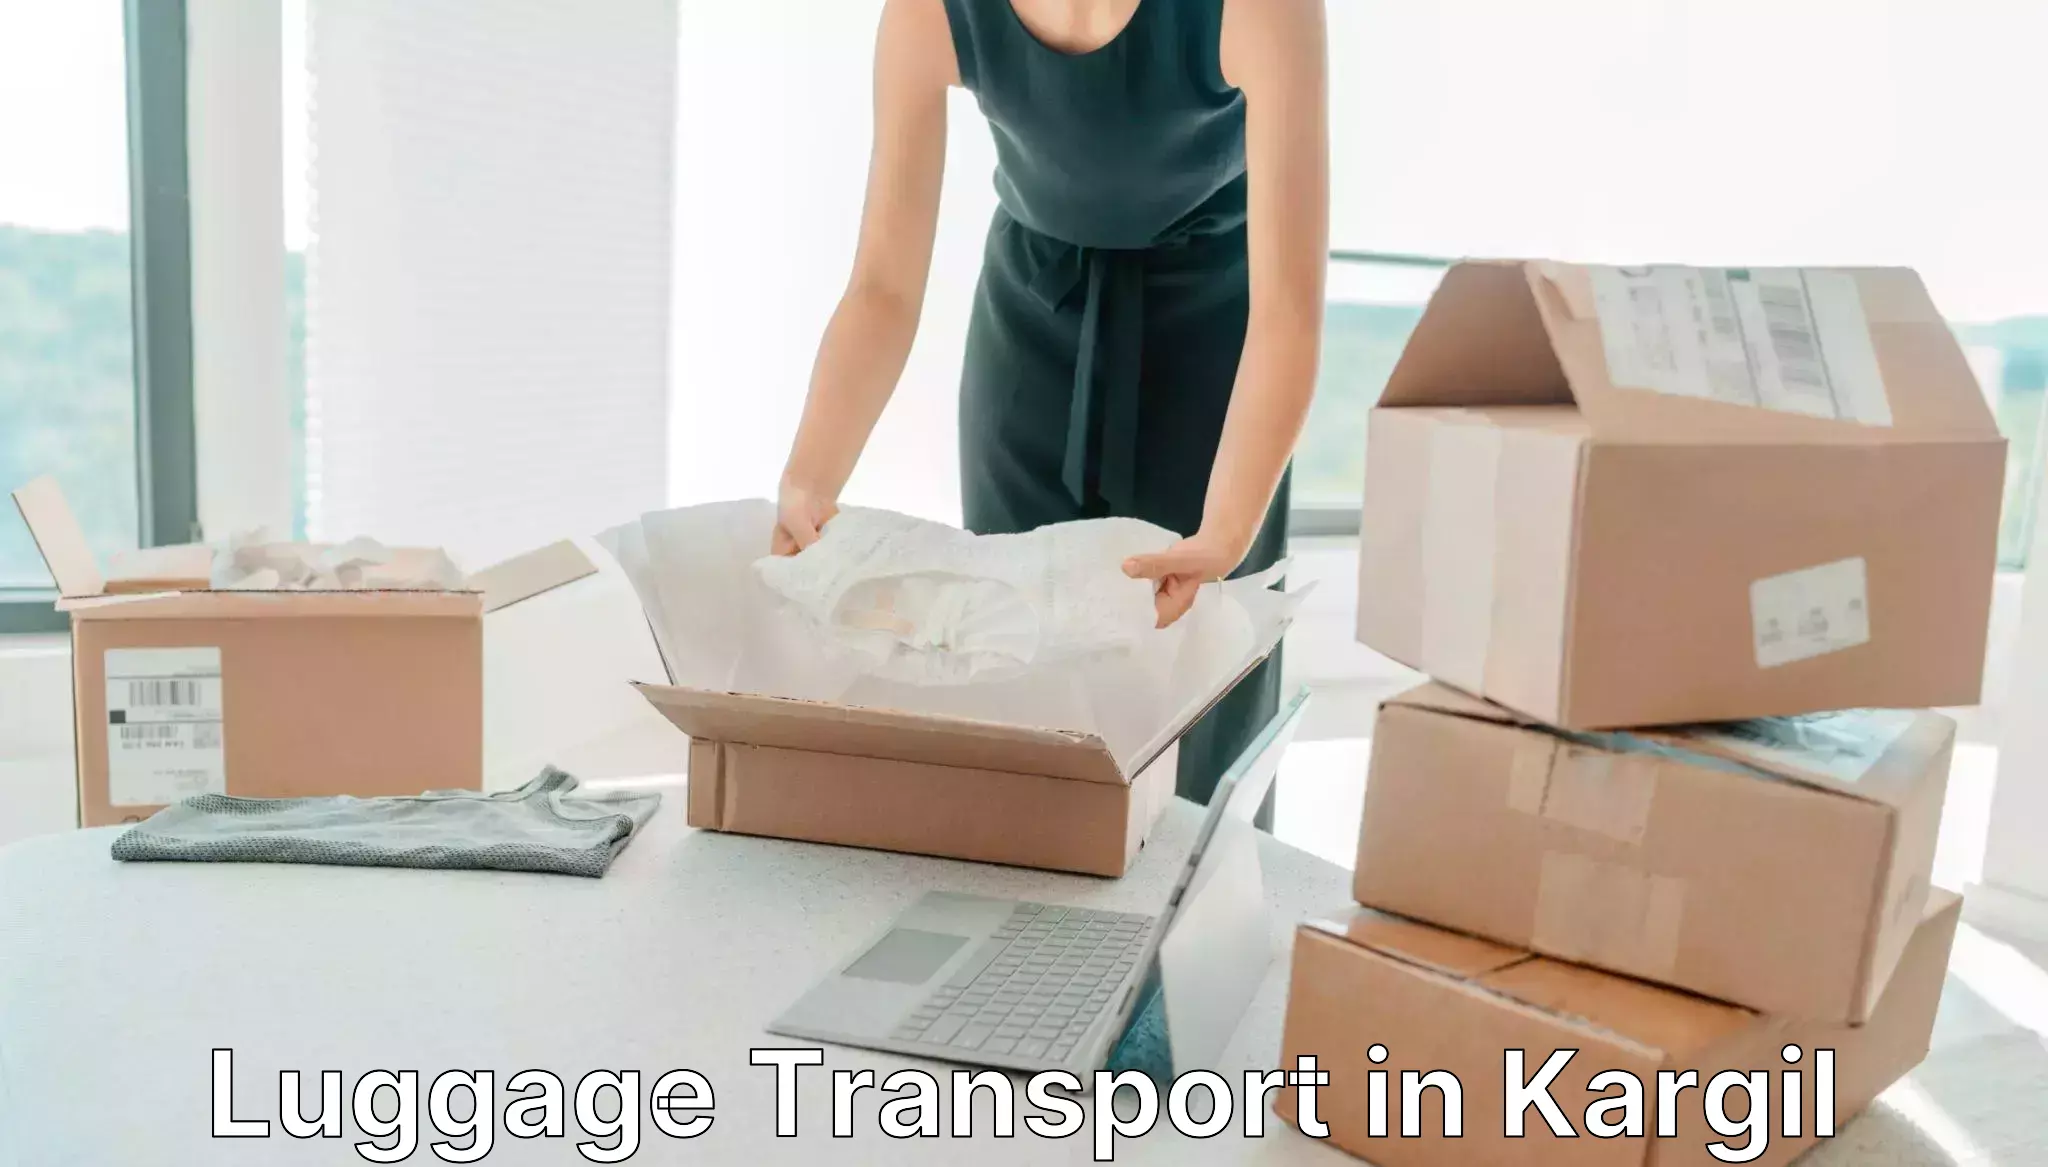 Baggage relocation service in Kargil